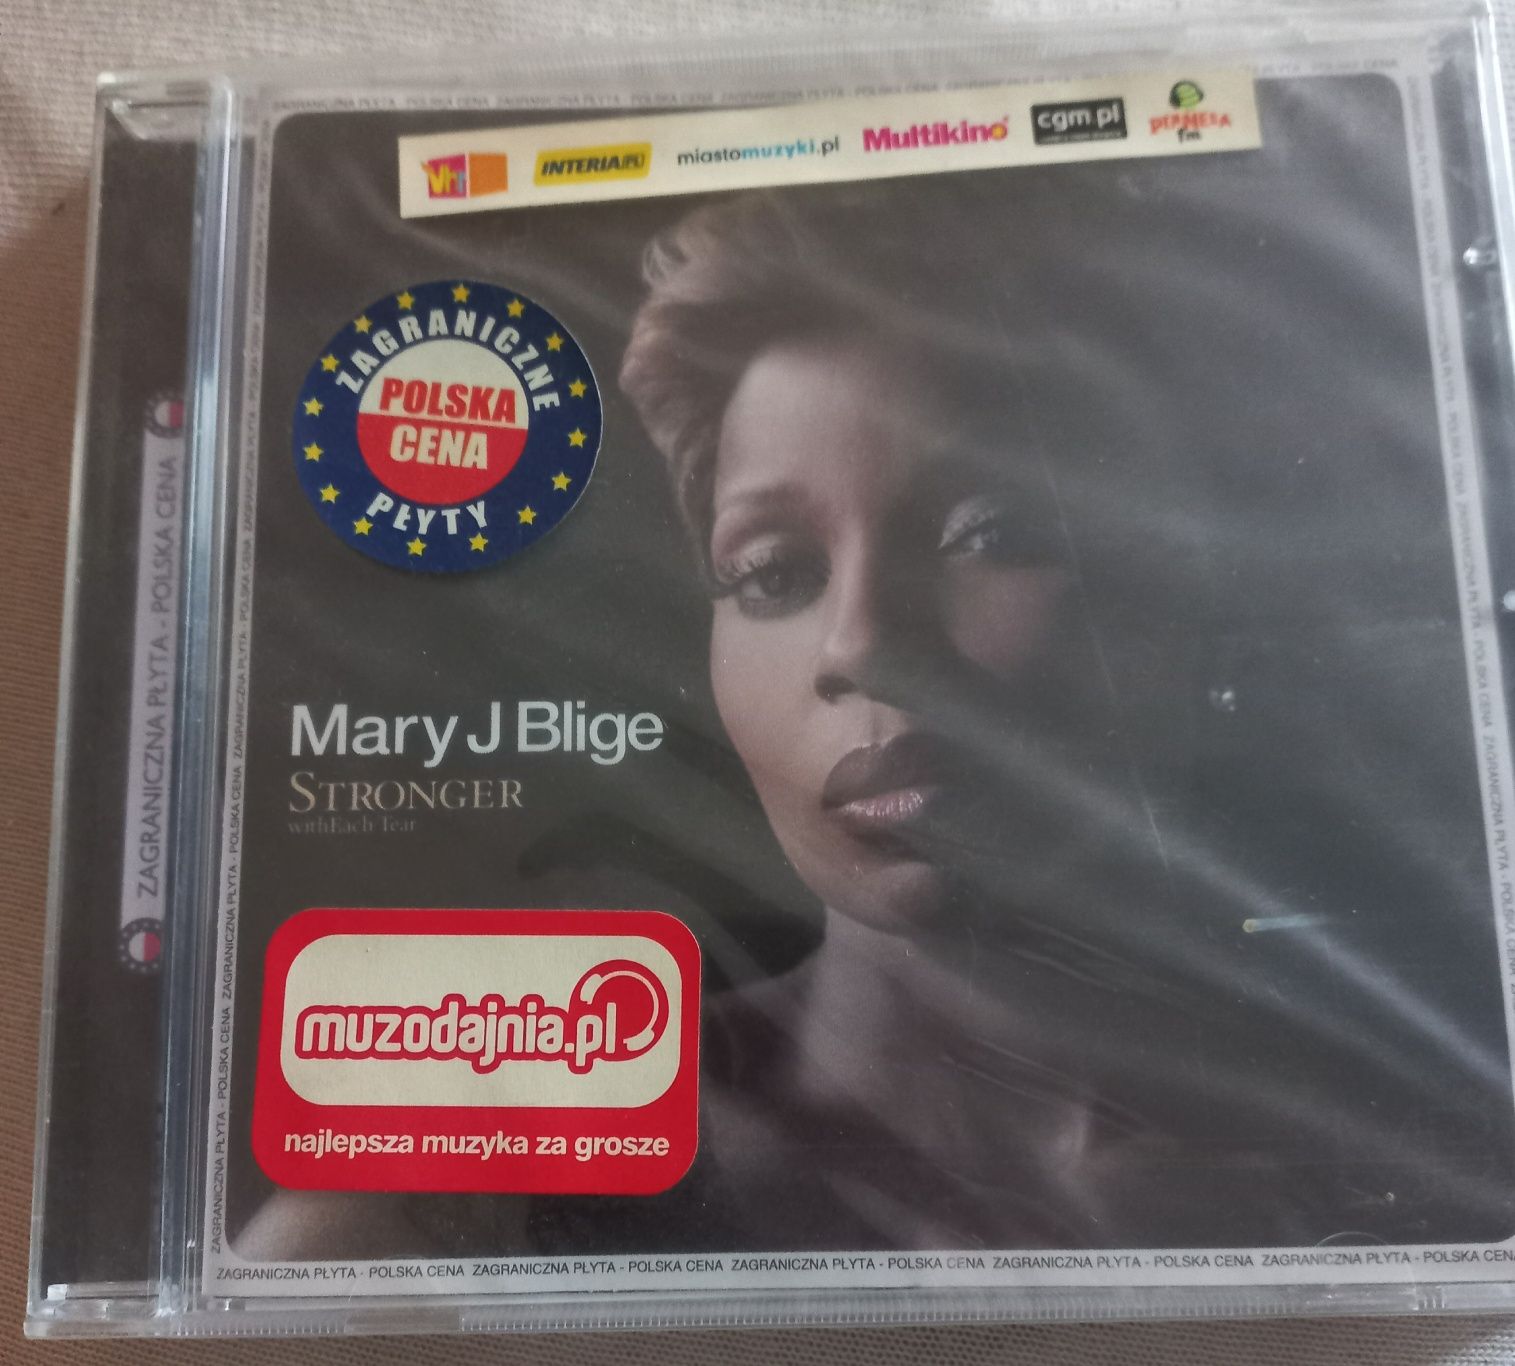 Mary J Blige "Stronger" cd nowa w folii